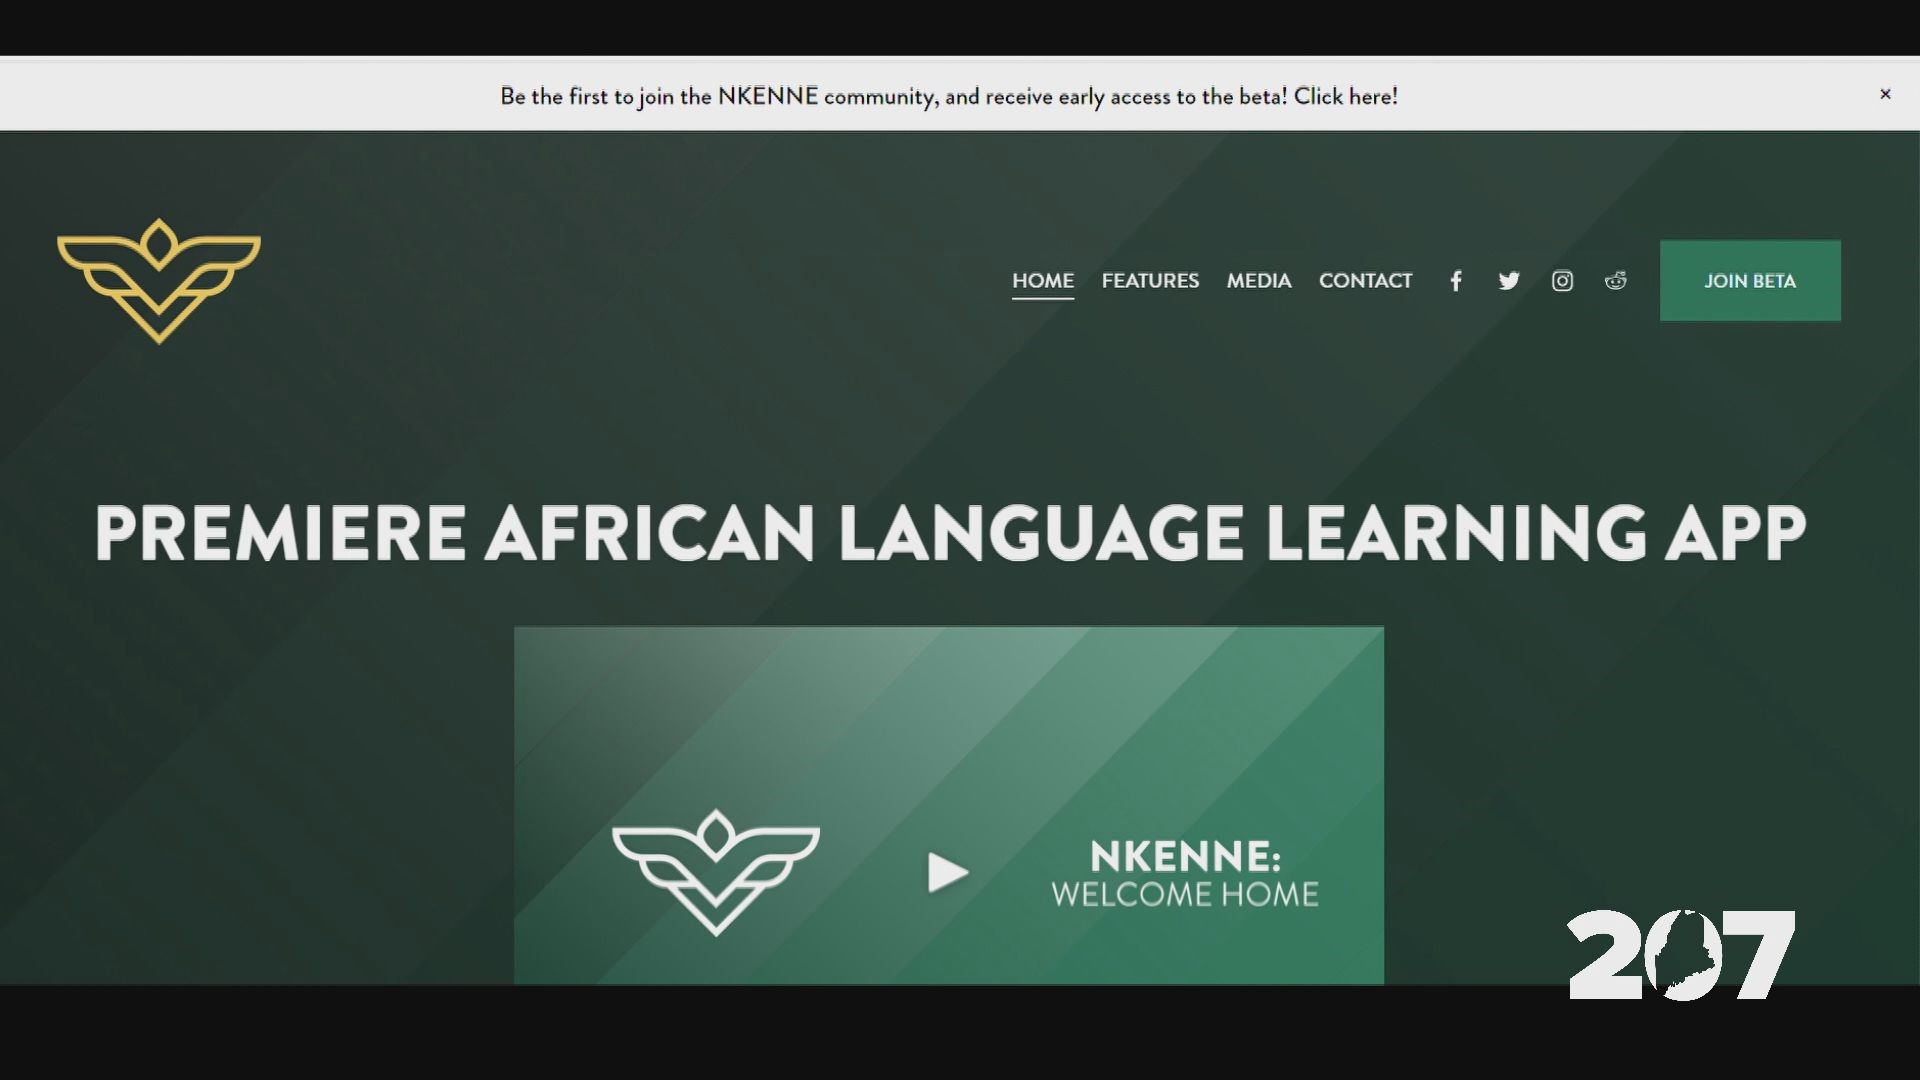 Michael Odokara-Okigbo wants to create an app to help learn African languages